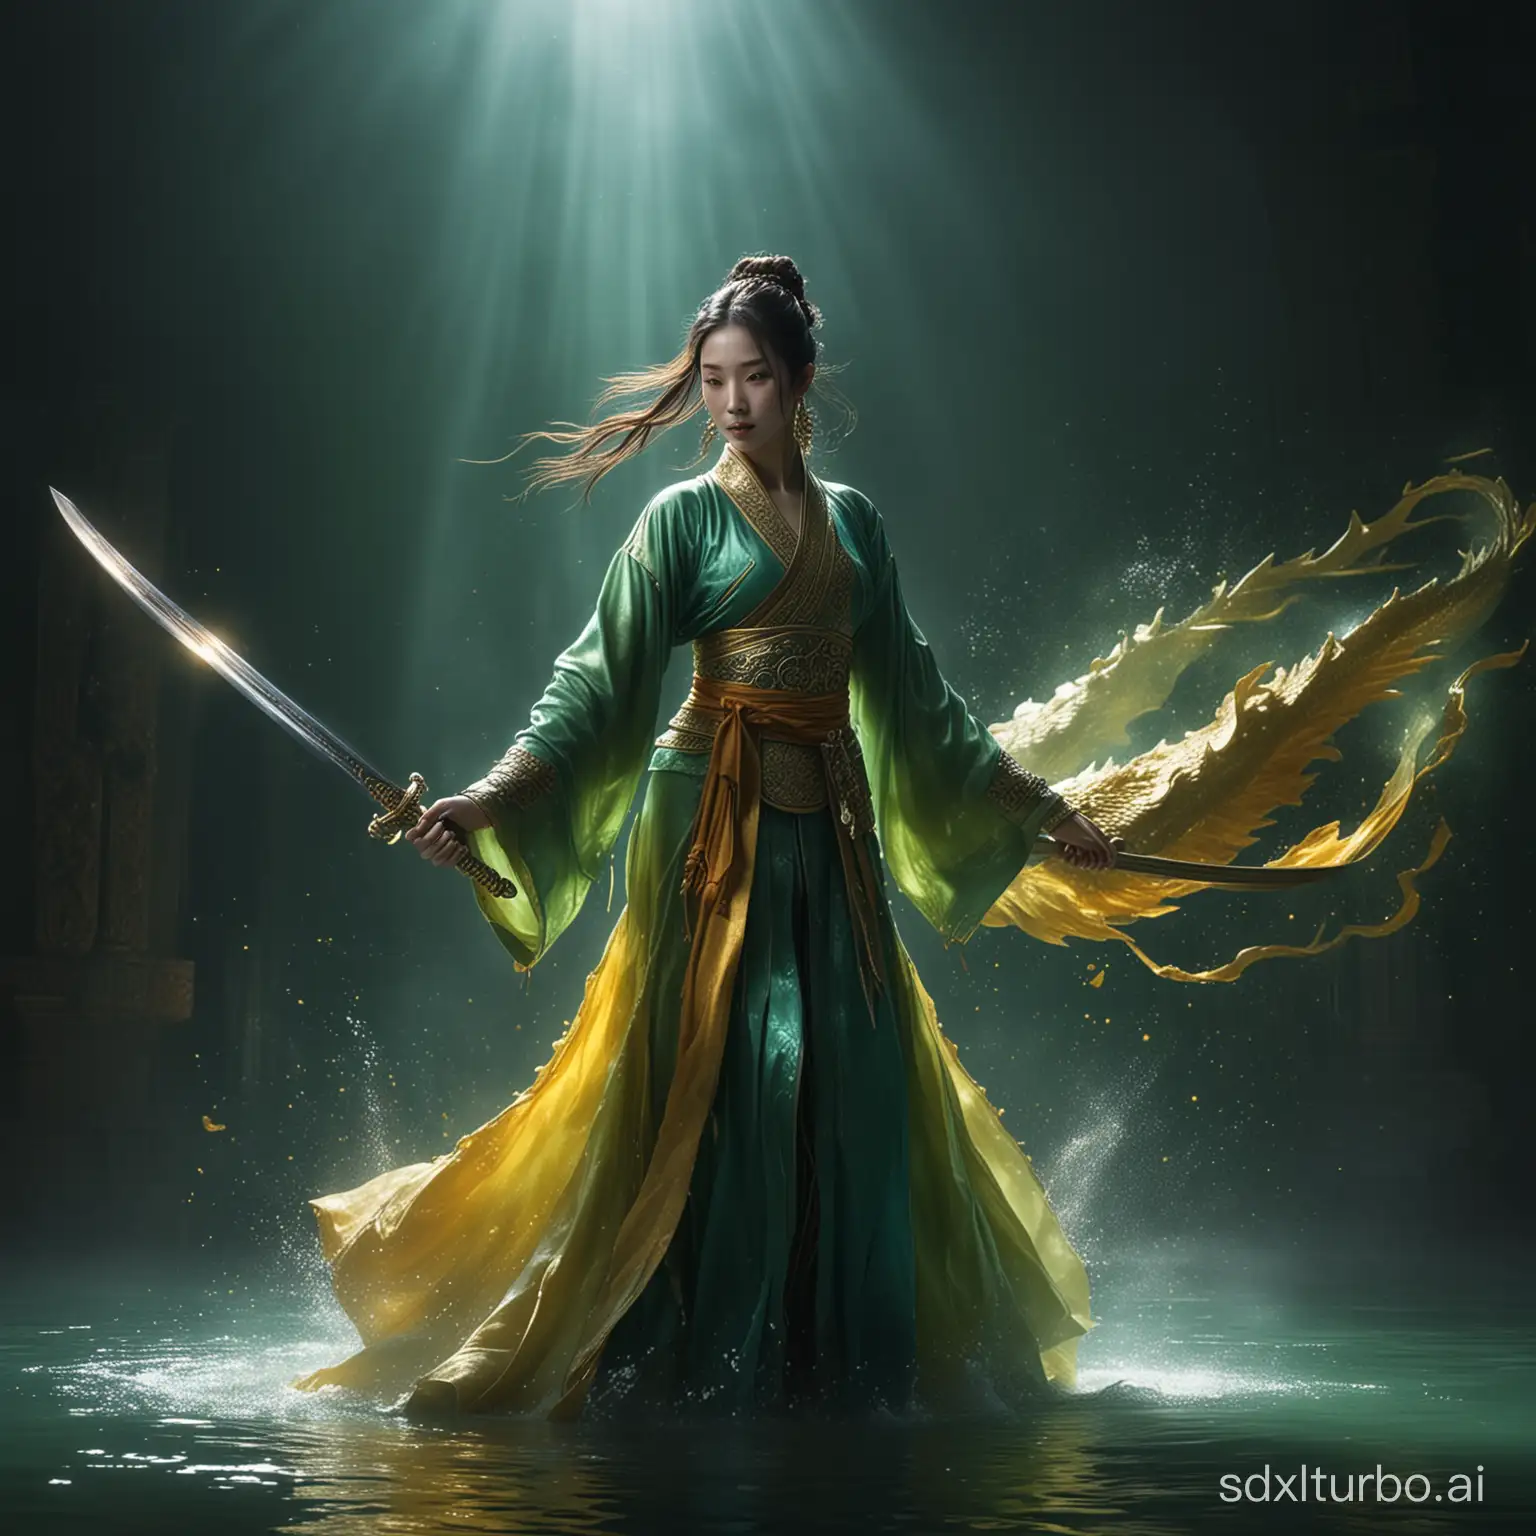 Ethereal-Sword-Dance-Oriental-Beauty-with-Glowing-Dragon-in-Eastern-Zhou-Dynasty-Setting